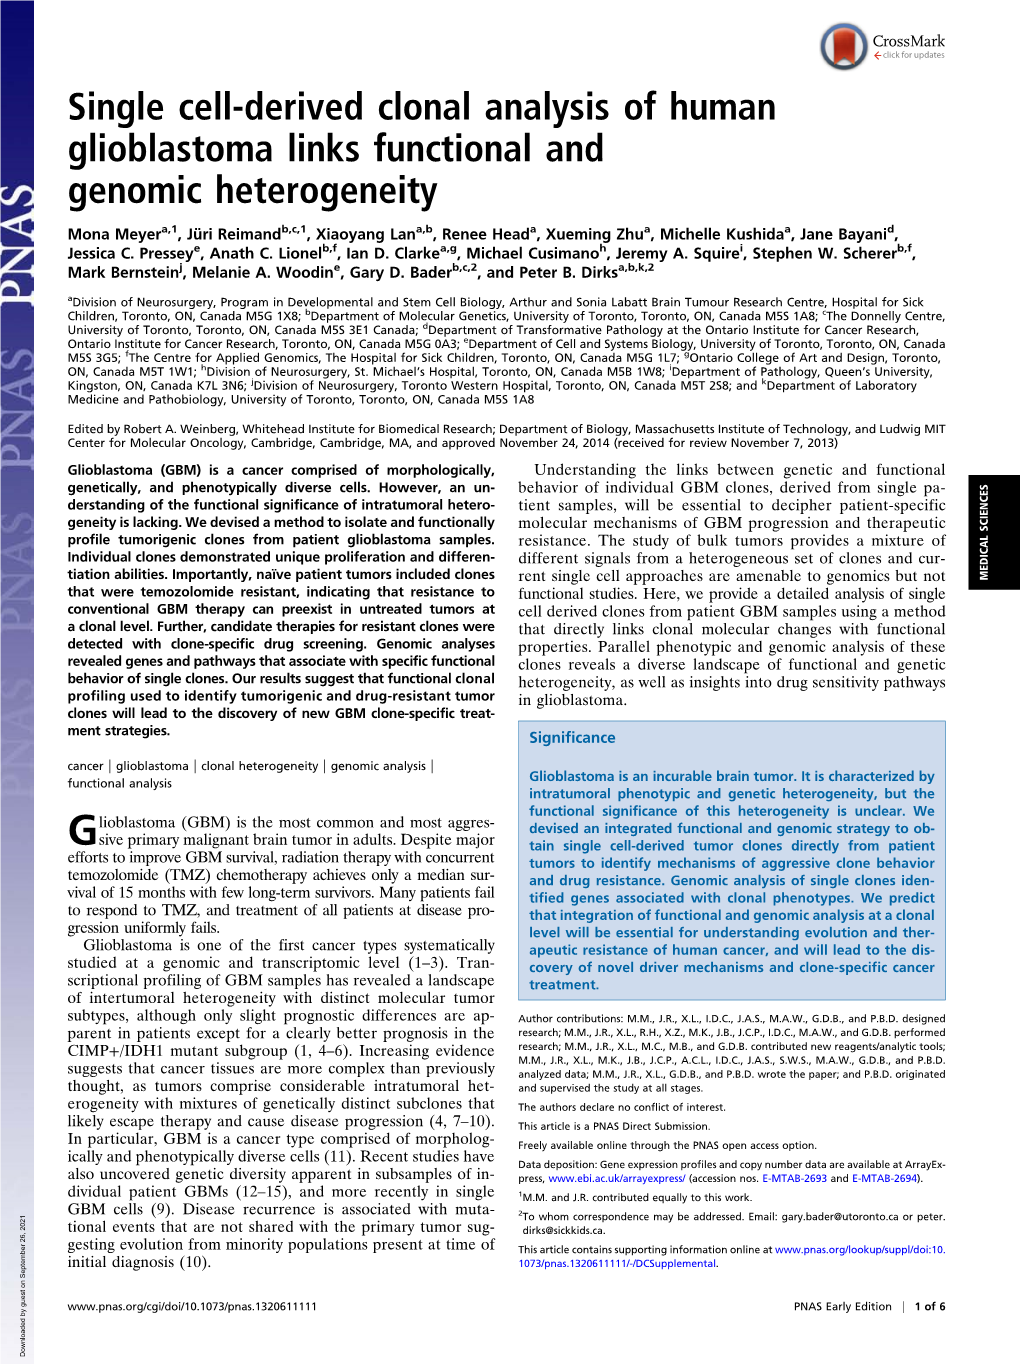 Single Cell-Derived Clonal Analysis of Human Glioblastoma Links Functional and Genomic Heterogeneity